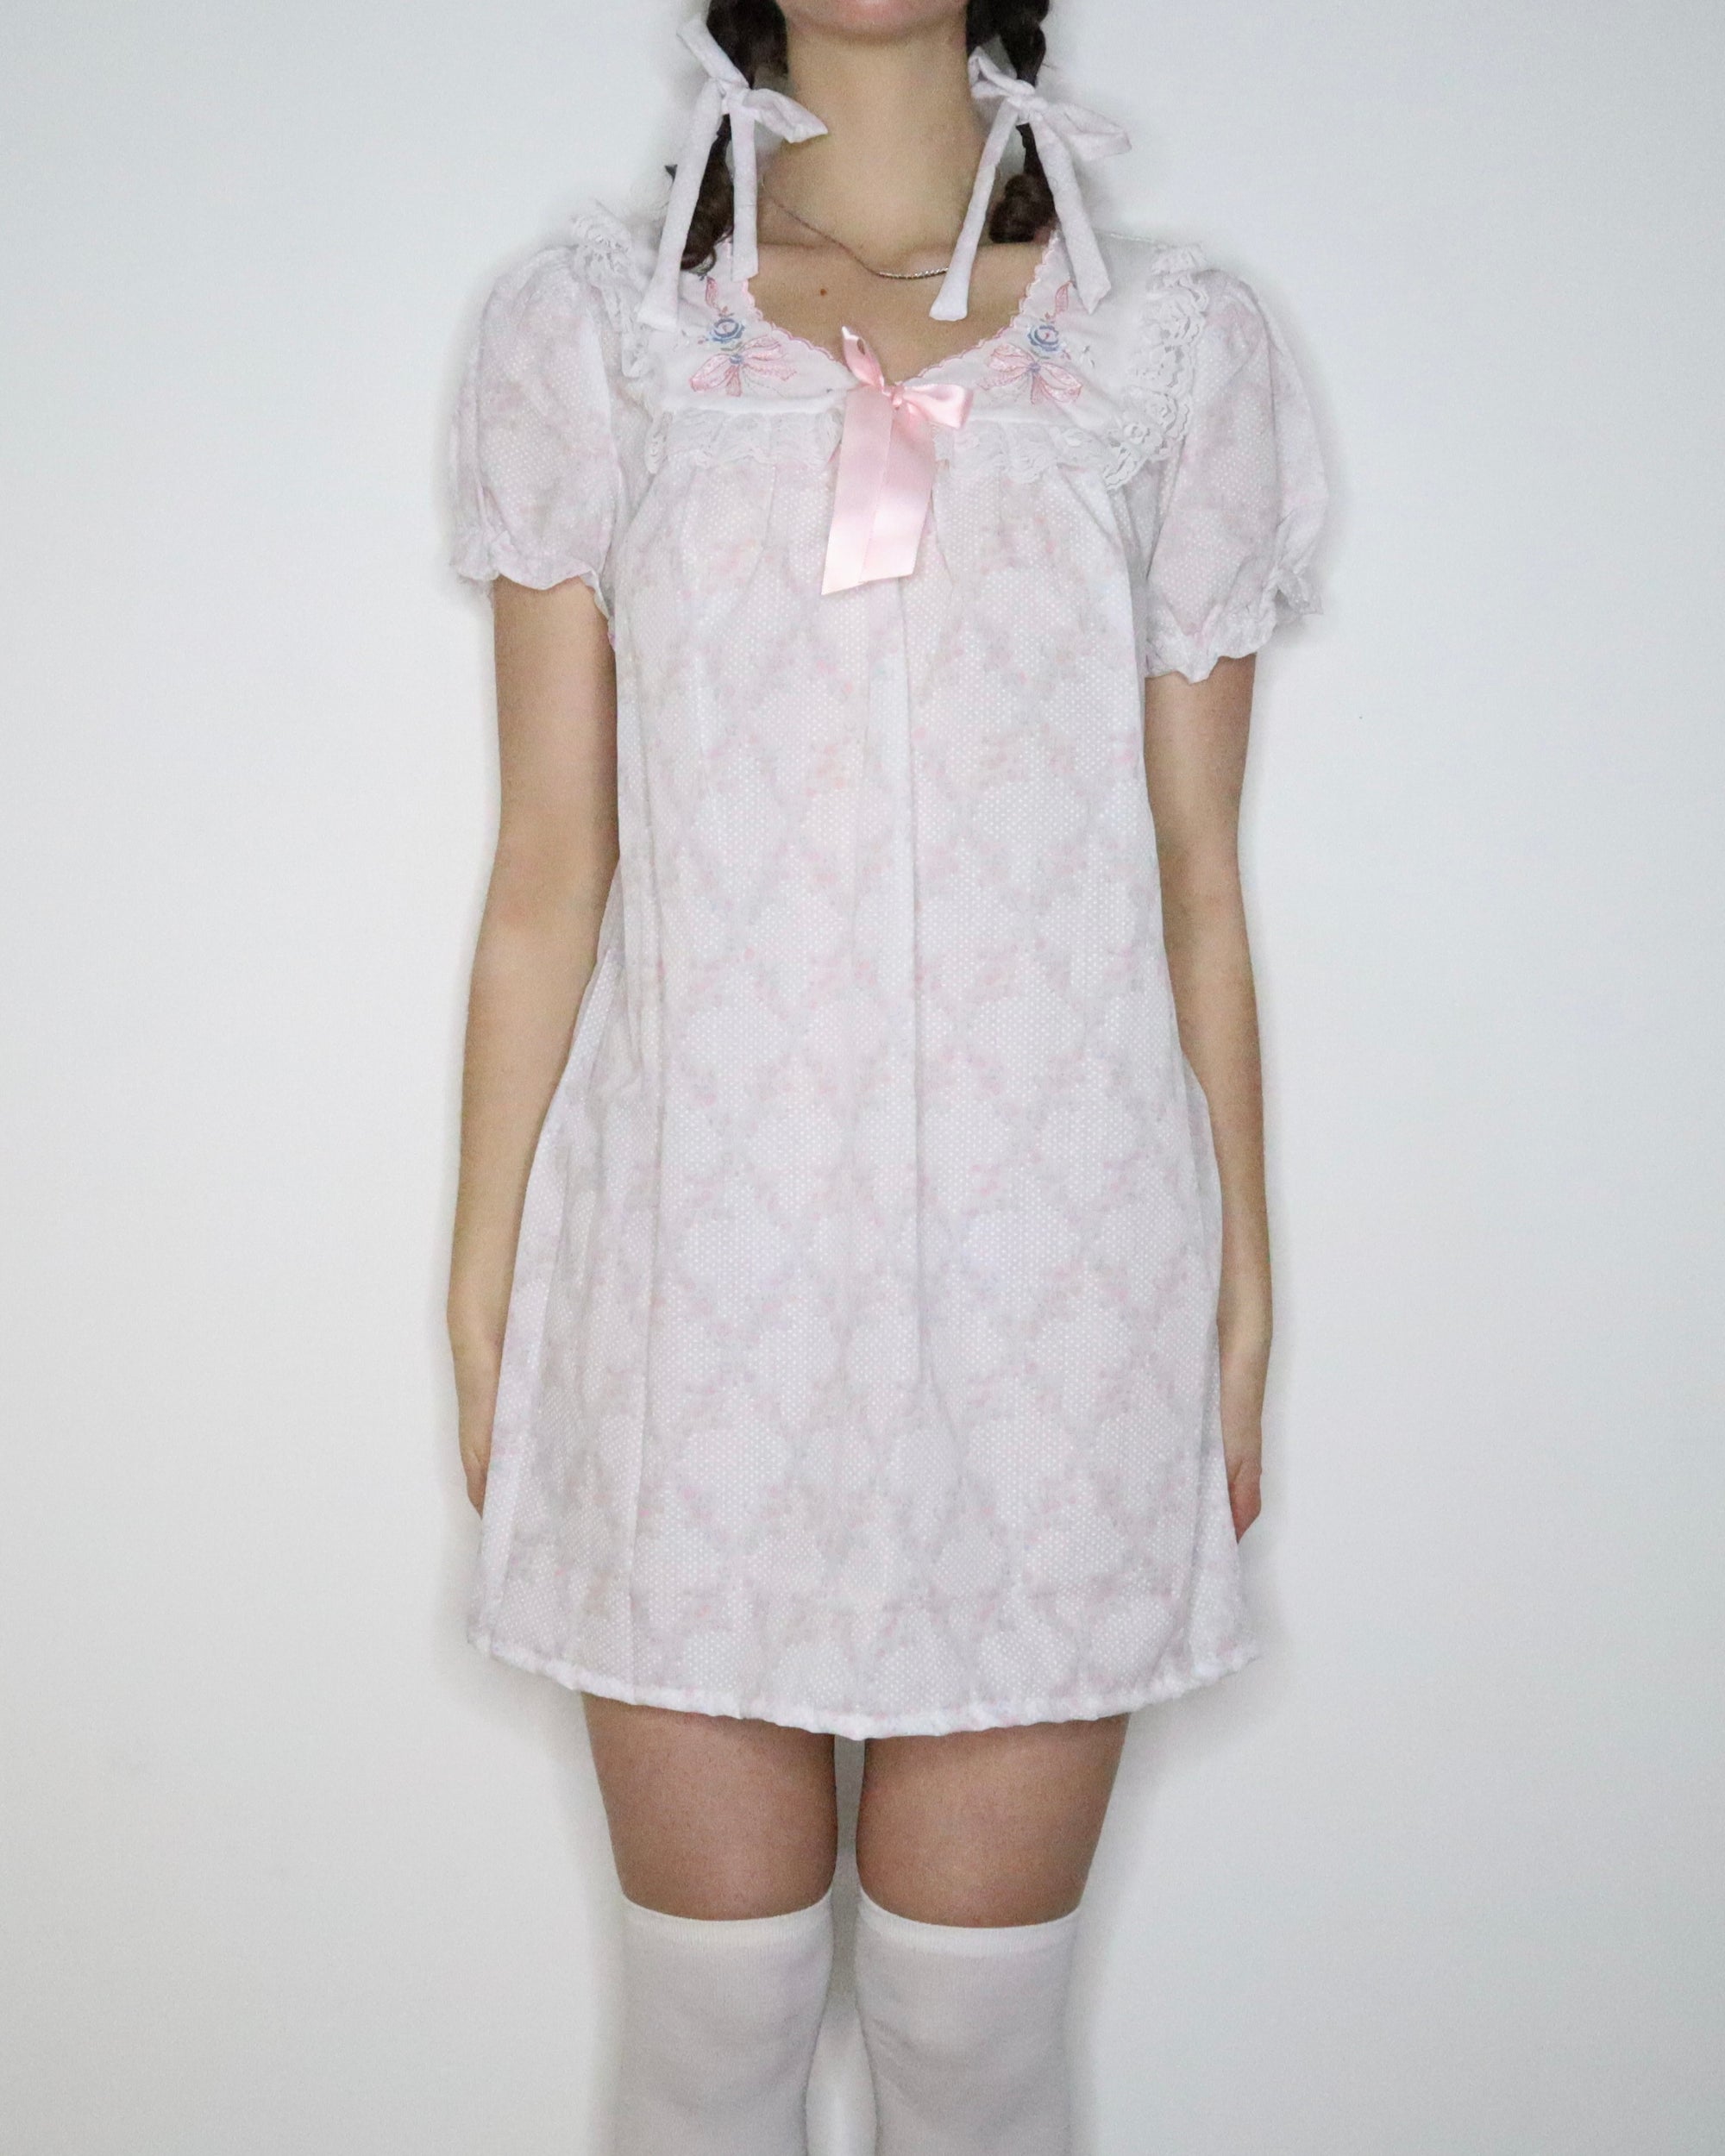 Pastel Babydoll Nightgown (Large) 